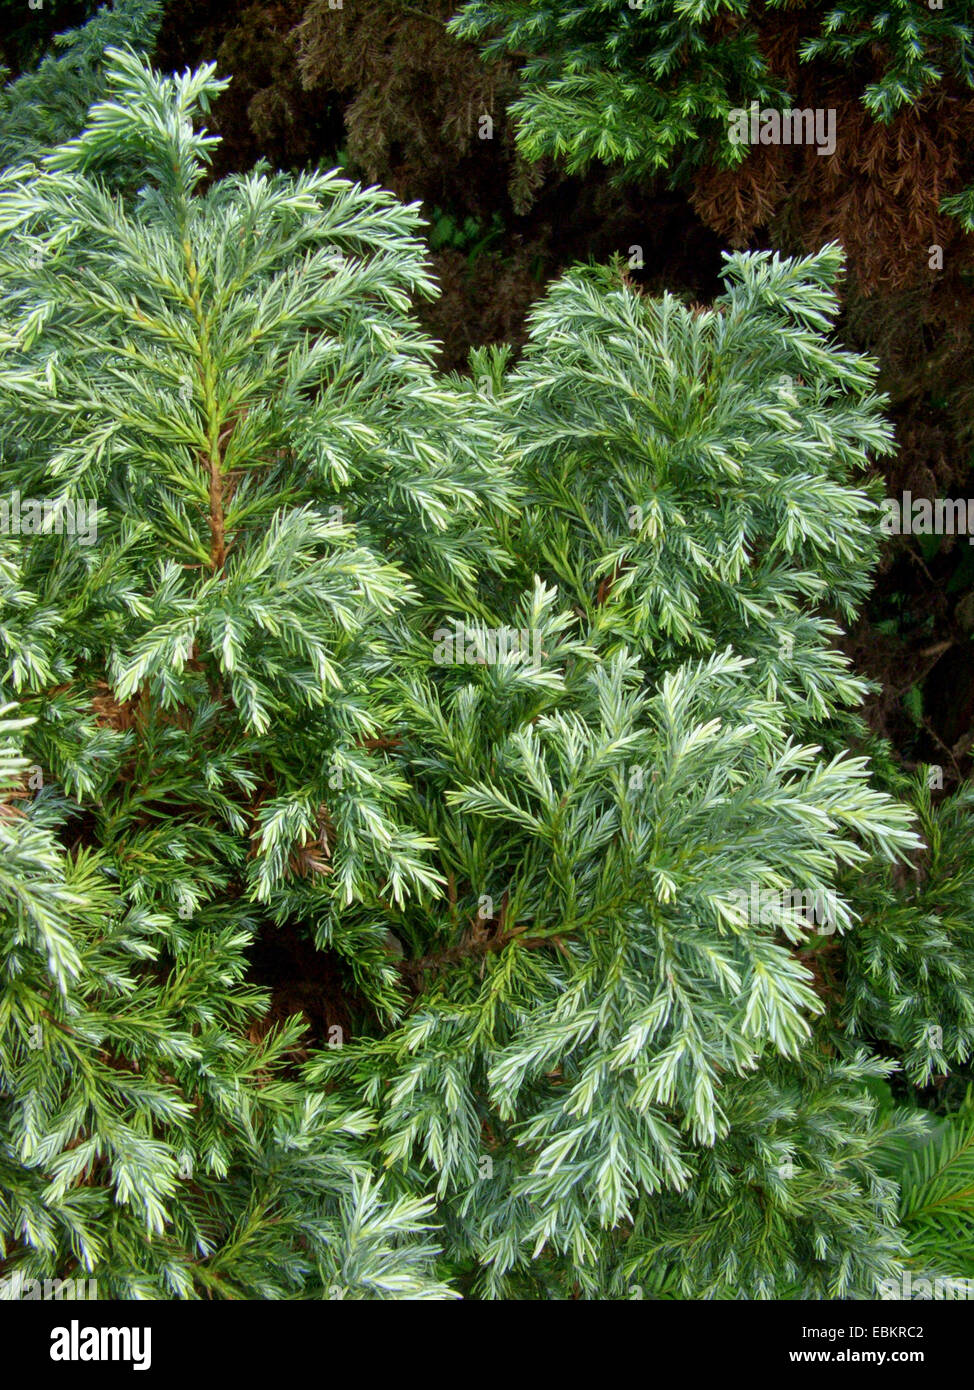 sawara falsecypress (Chamaecyparis pisifera 'Squarrosa', Chamaecyparis pisifera Squarrosa), cultivar group Squarrosa Stock Photo